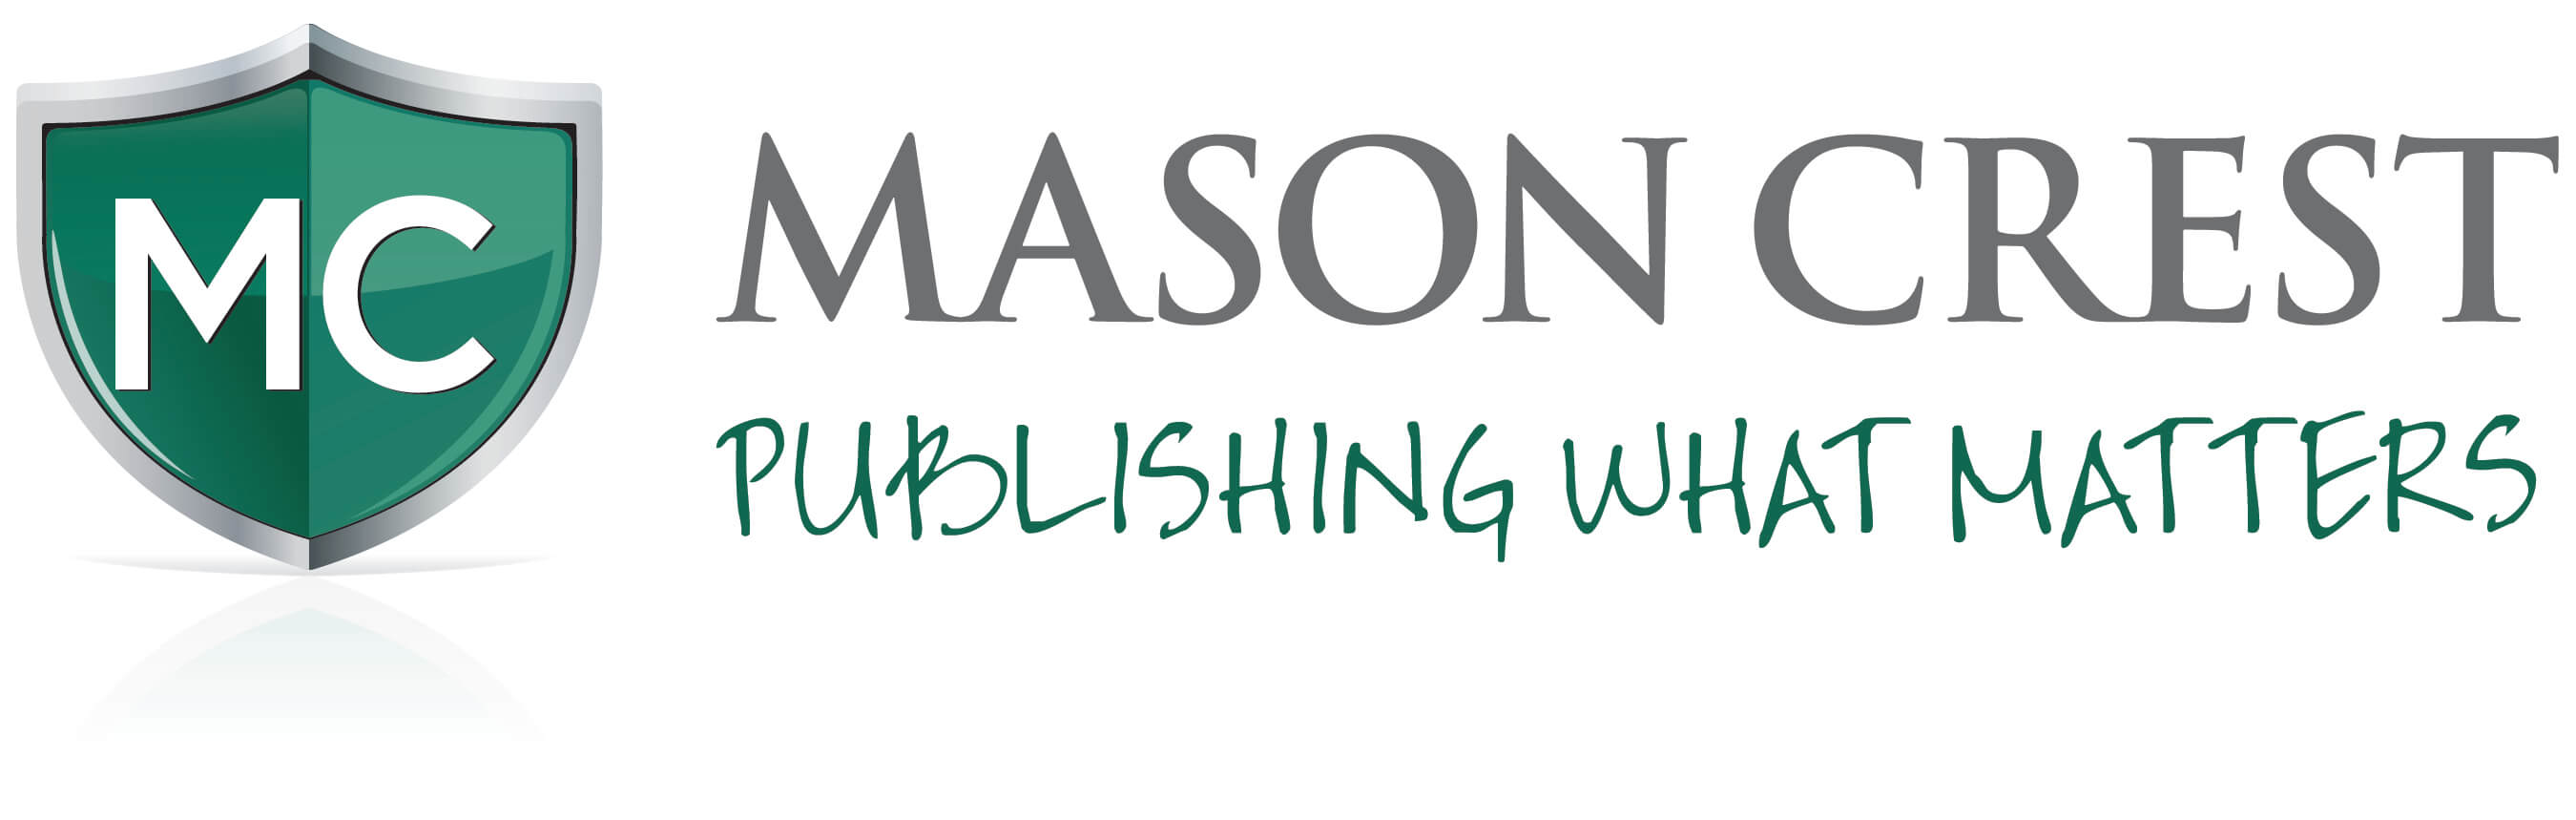 Mason Crest logo